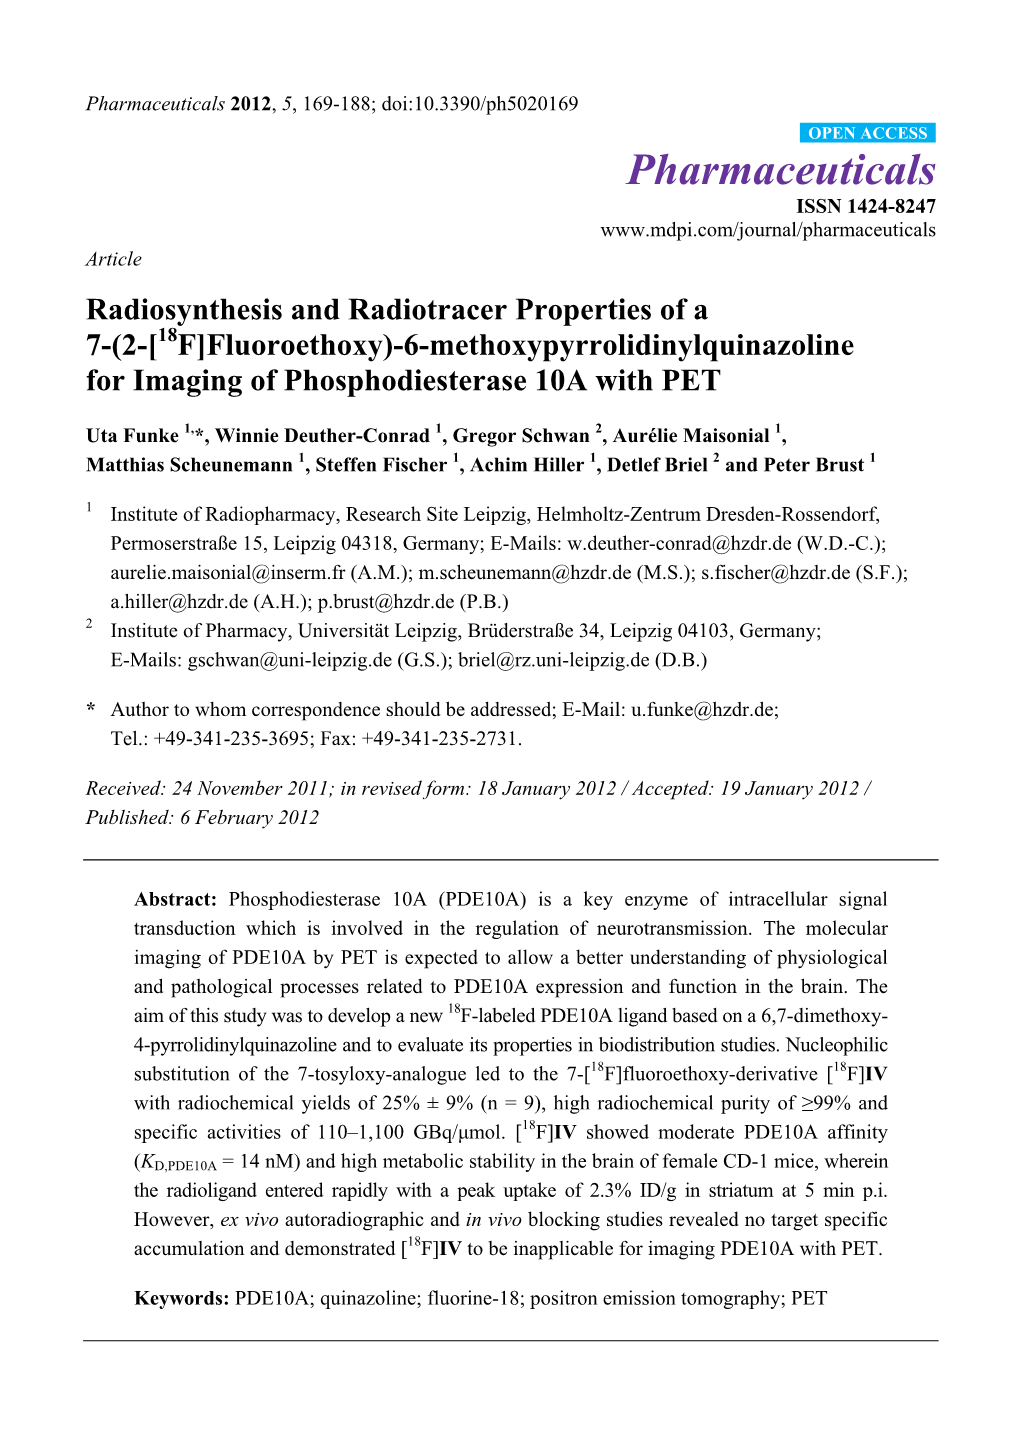 6-Methoxypyrrolidinylquinazoline for Imaging of Phosphodiesterase 10A with PET